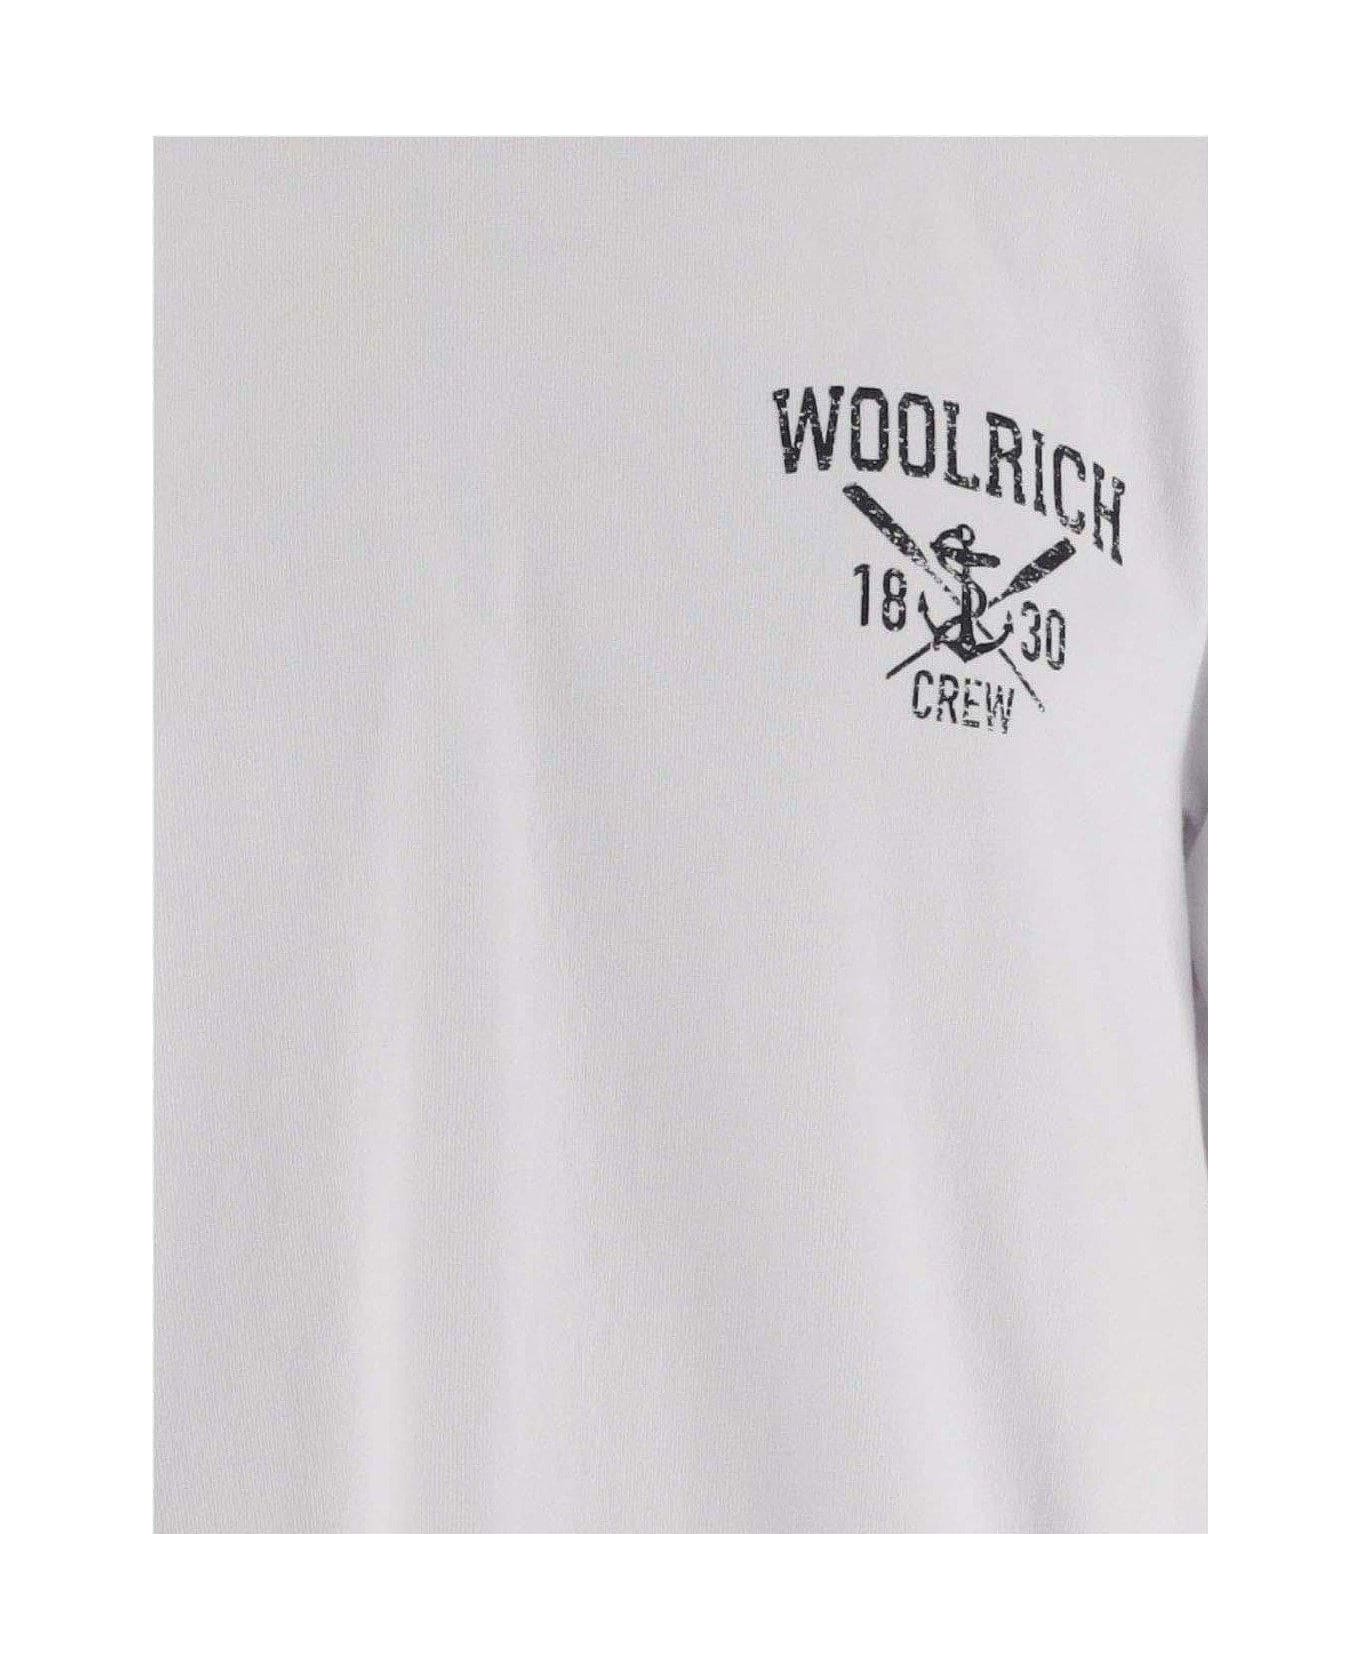 Woolrich Logo Printed Crewneck T-shirt - Bright White